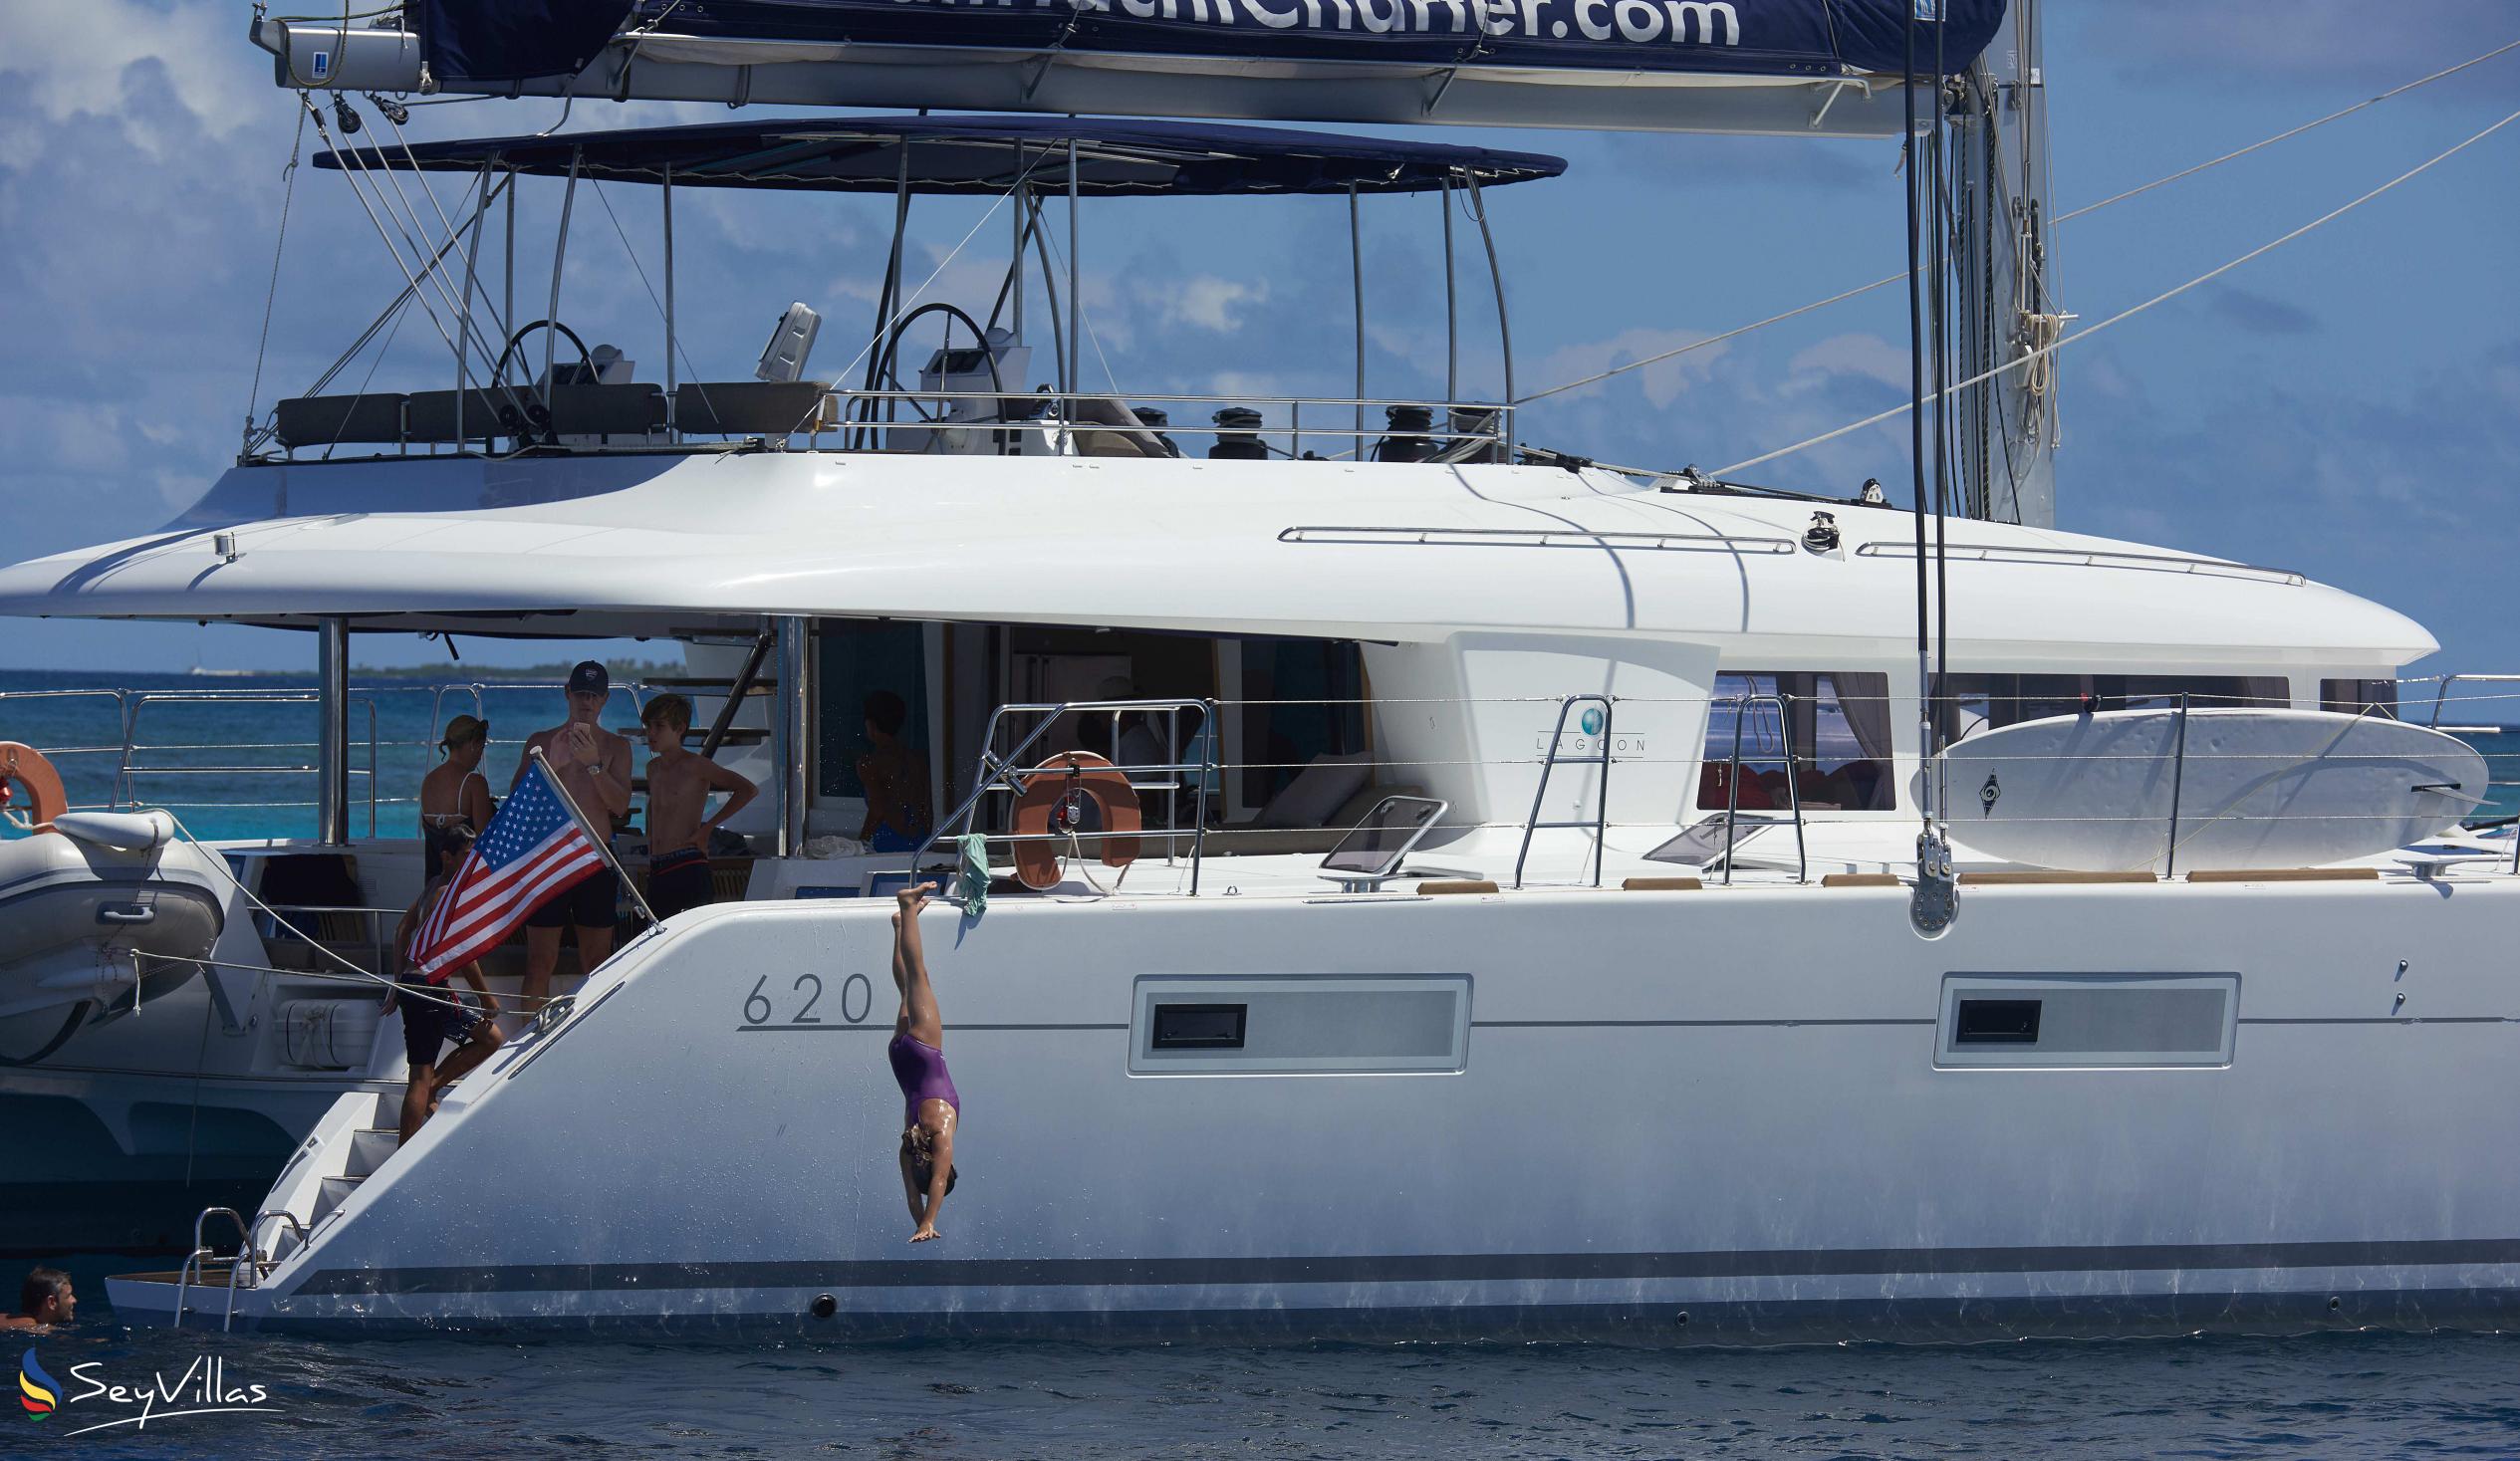 Photo 6: Dream Yacht Silhouette Dream Premium - Outdoor area - Seychelles (Seychelles)